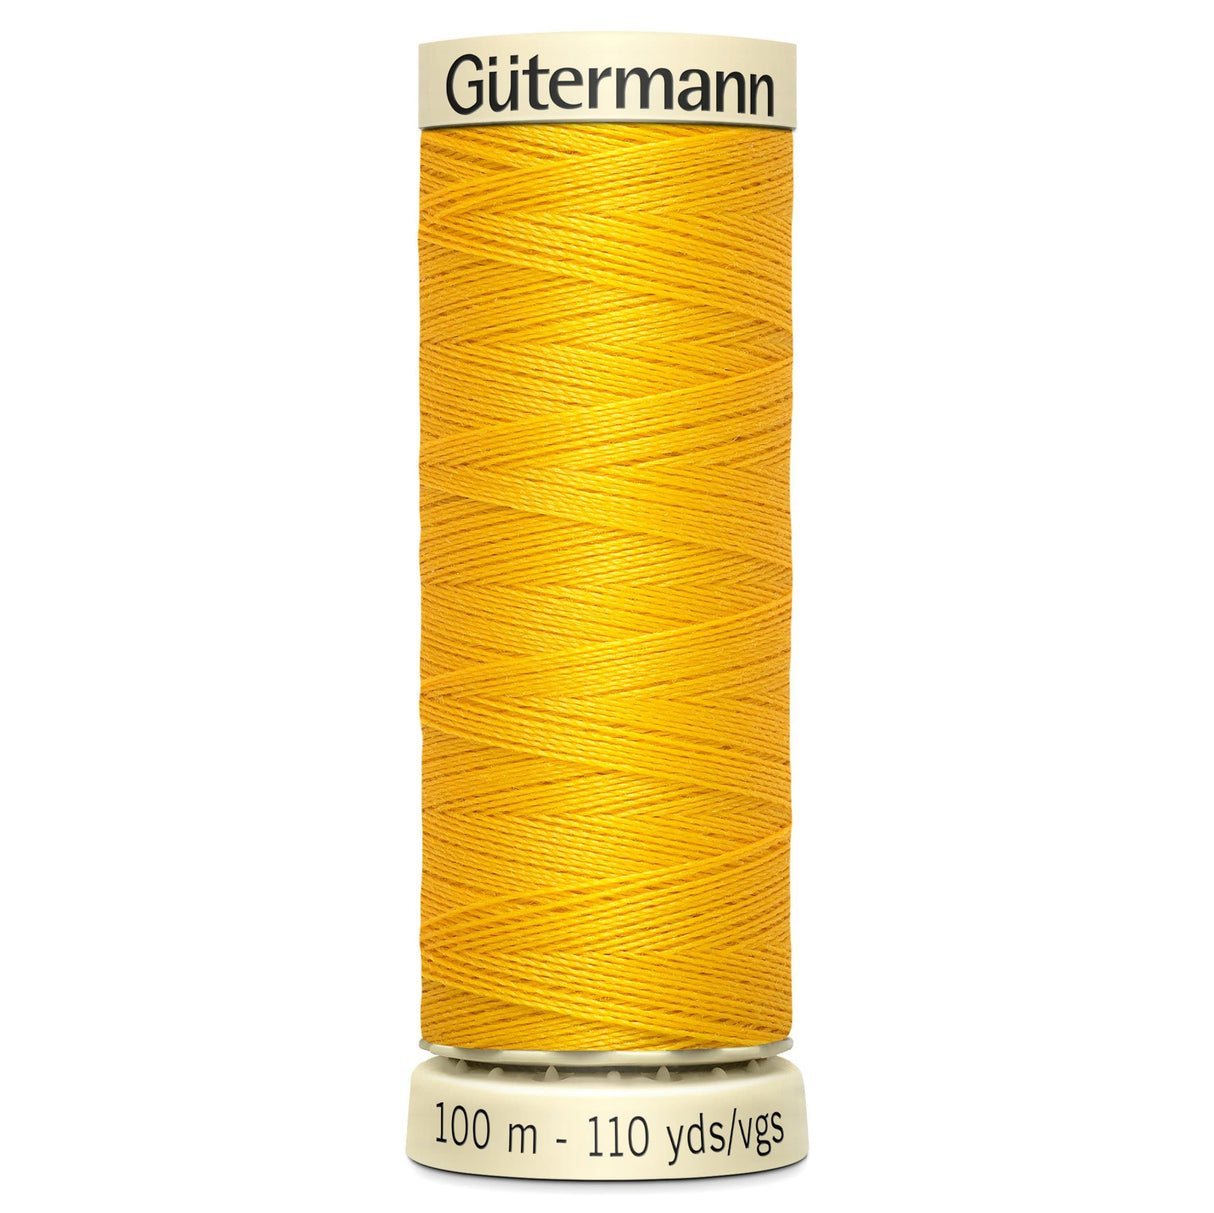 Groves Haberdashery 106 Gutermann Thread Sewing Cotton 100 m Black to Pink